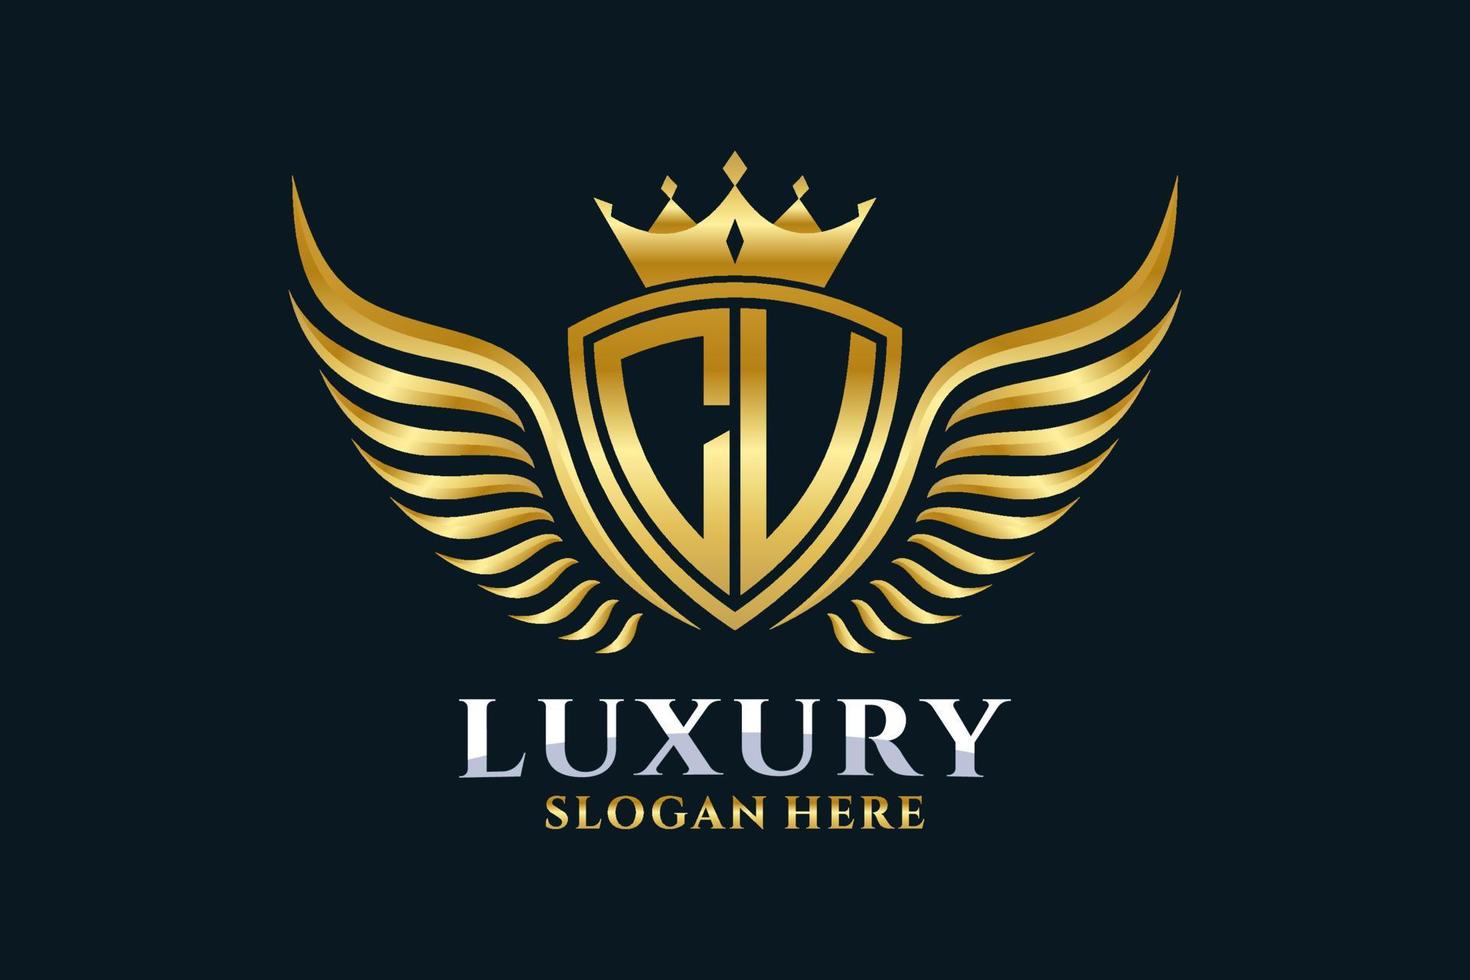 luxe Koninklijk vleugel brief cu kam goud kleur logo vector, zege logo, kam logo, vleugel logo, vector logo sjabloon.